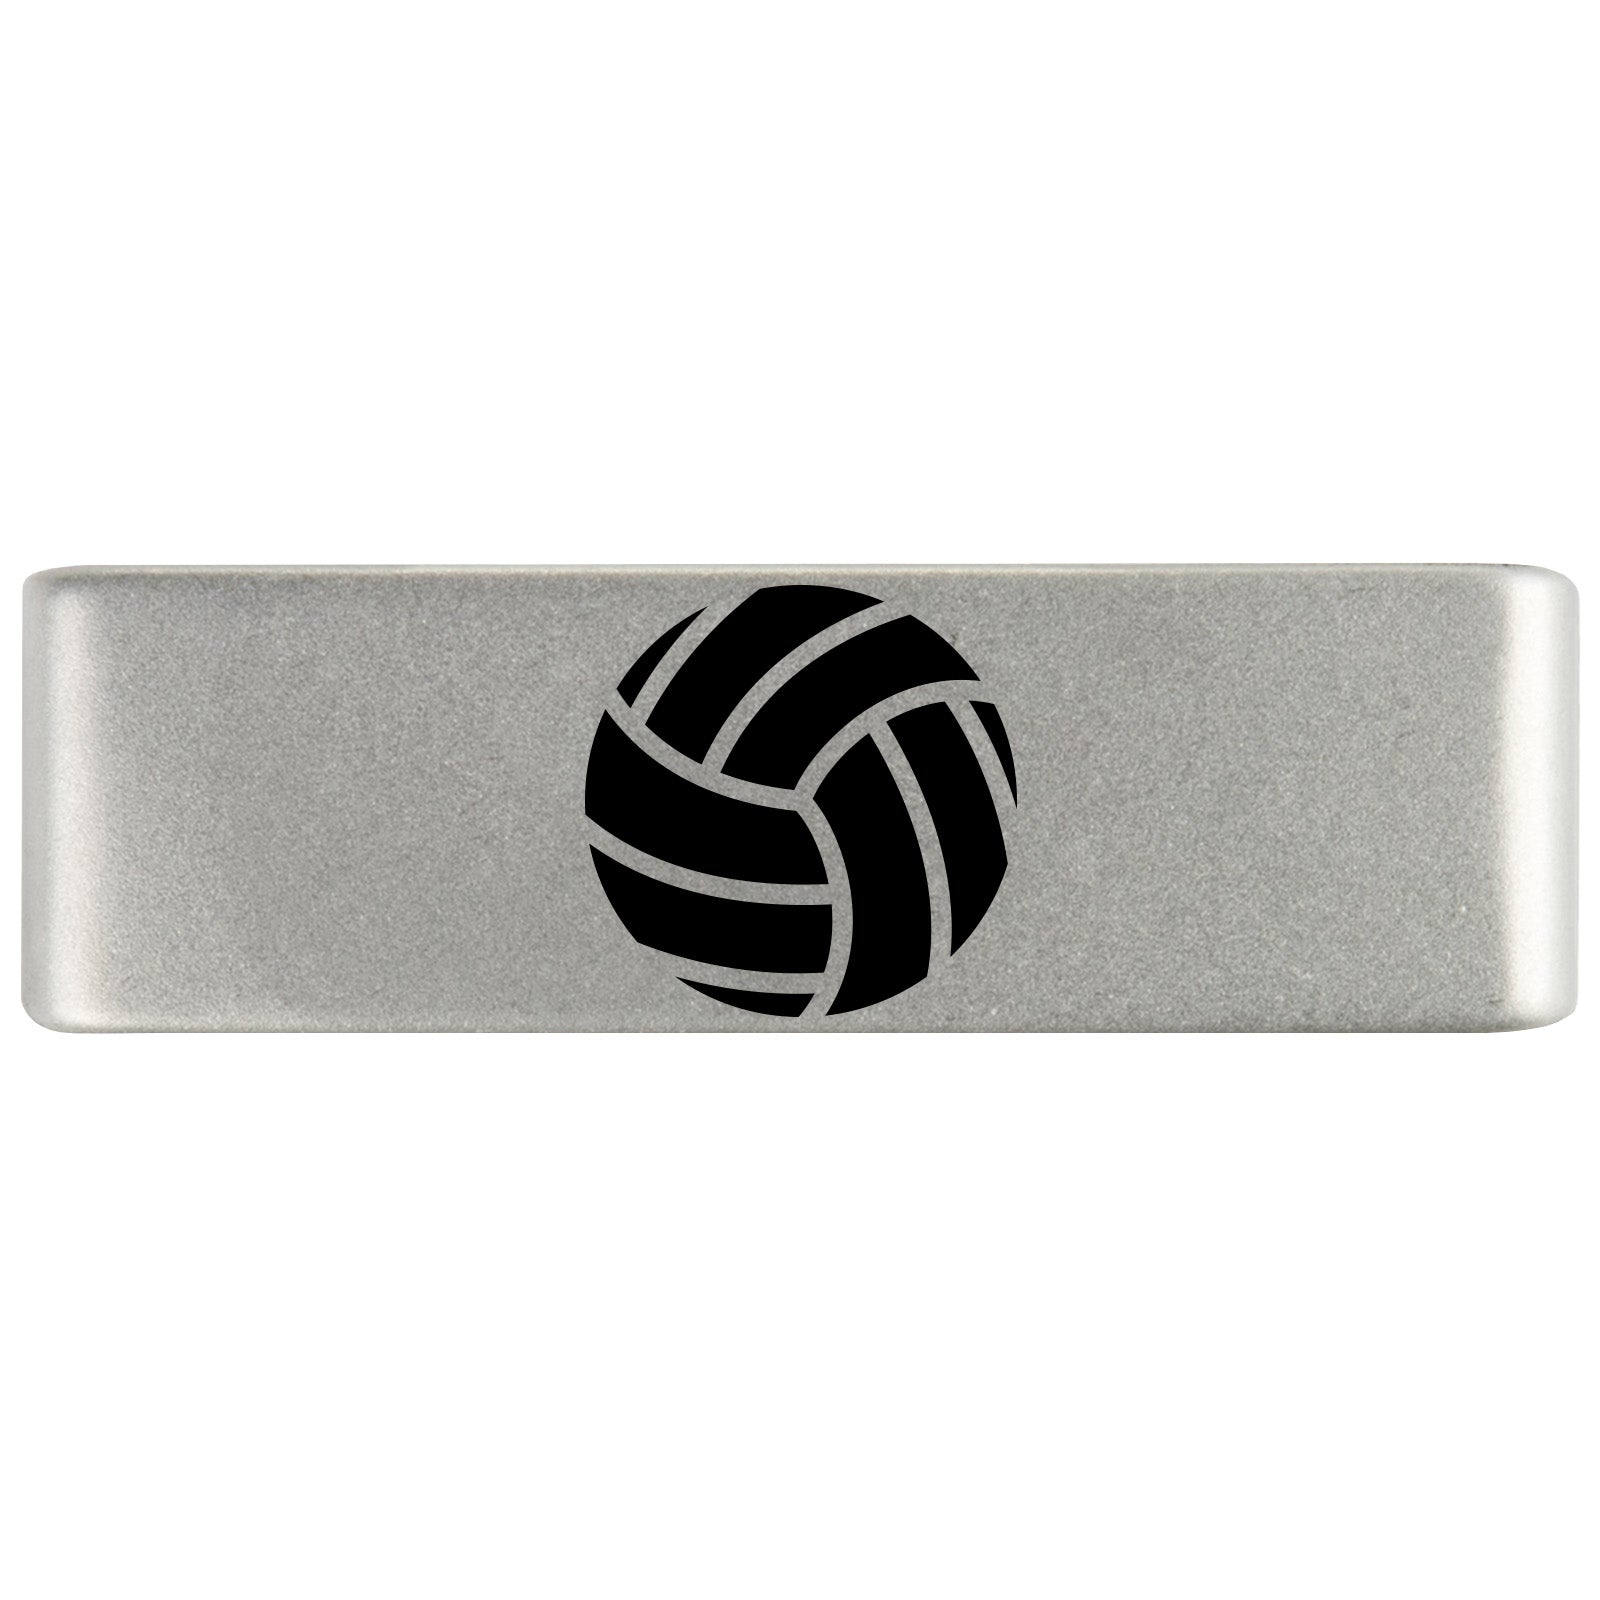 Volleyball Badge Badge 19mm - ROAD iD